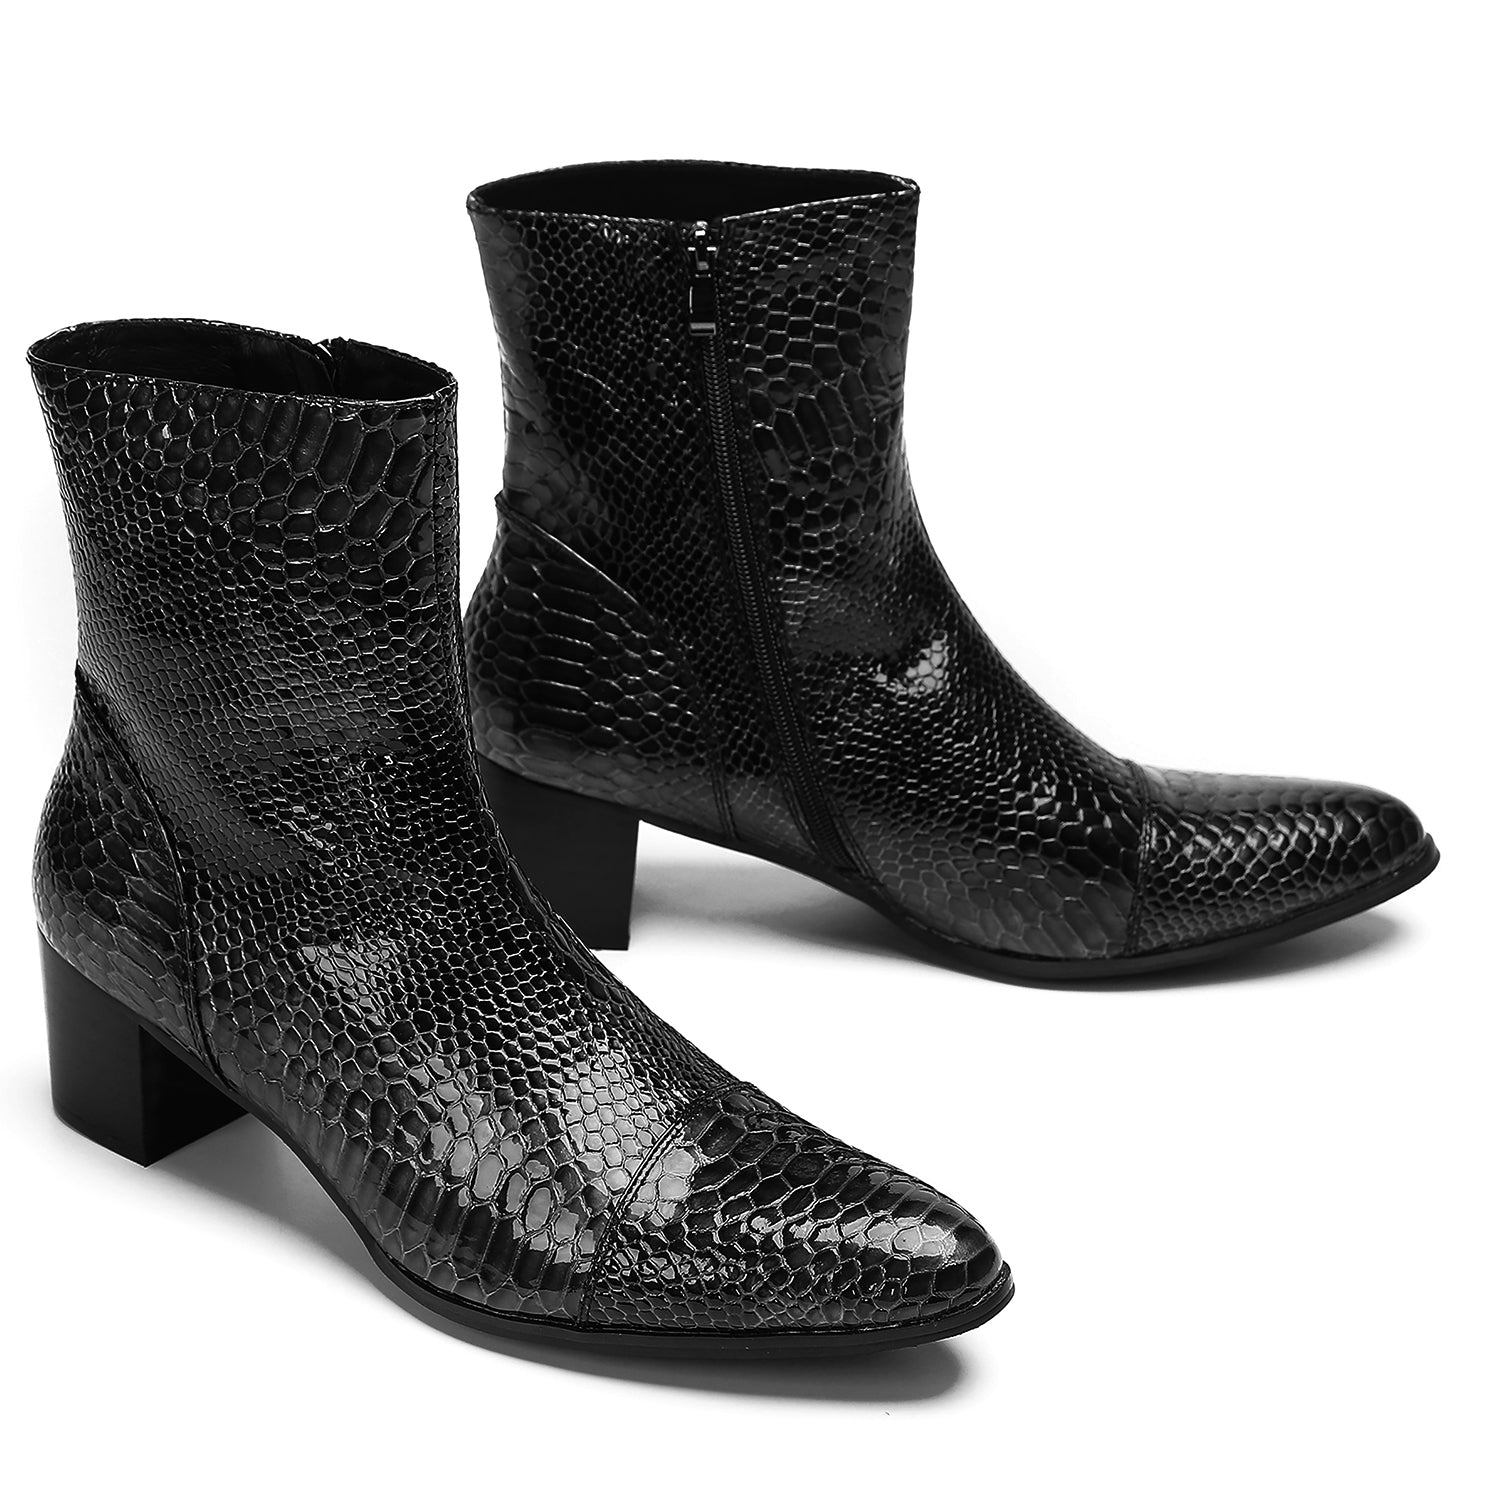 Men's Casual Metal-Tip Western Boots